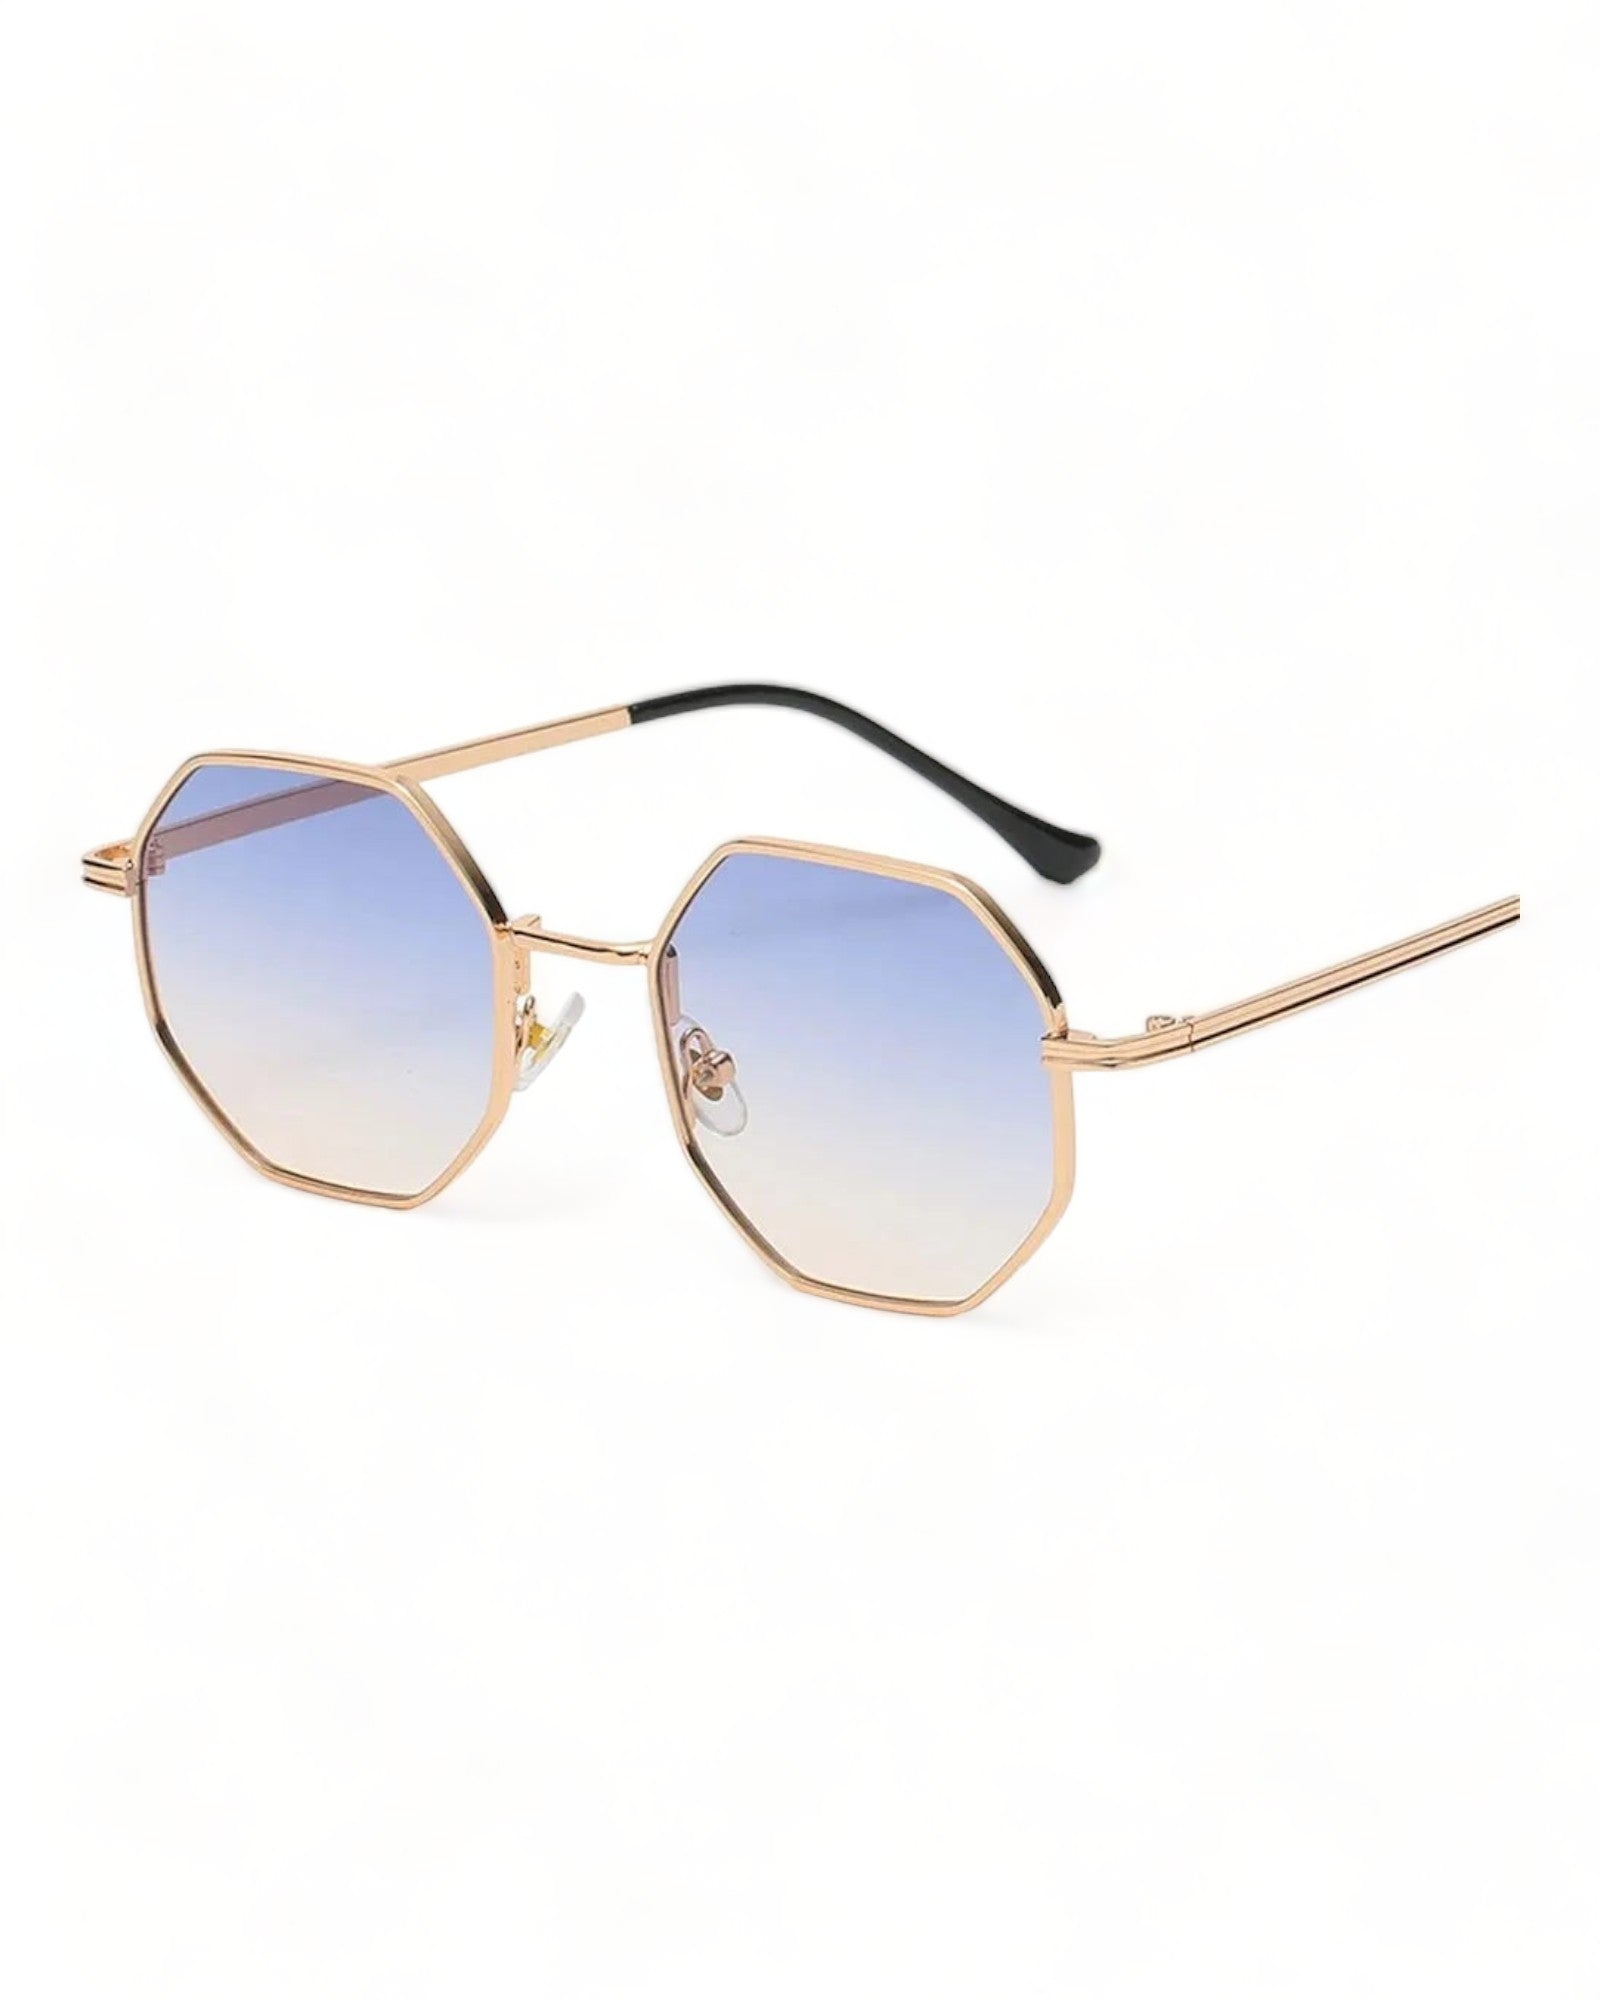 Sunglasses Eyewear Gold Frame Blue Lens Festival Fashion Concert Rave Outfit Party boho style